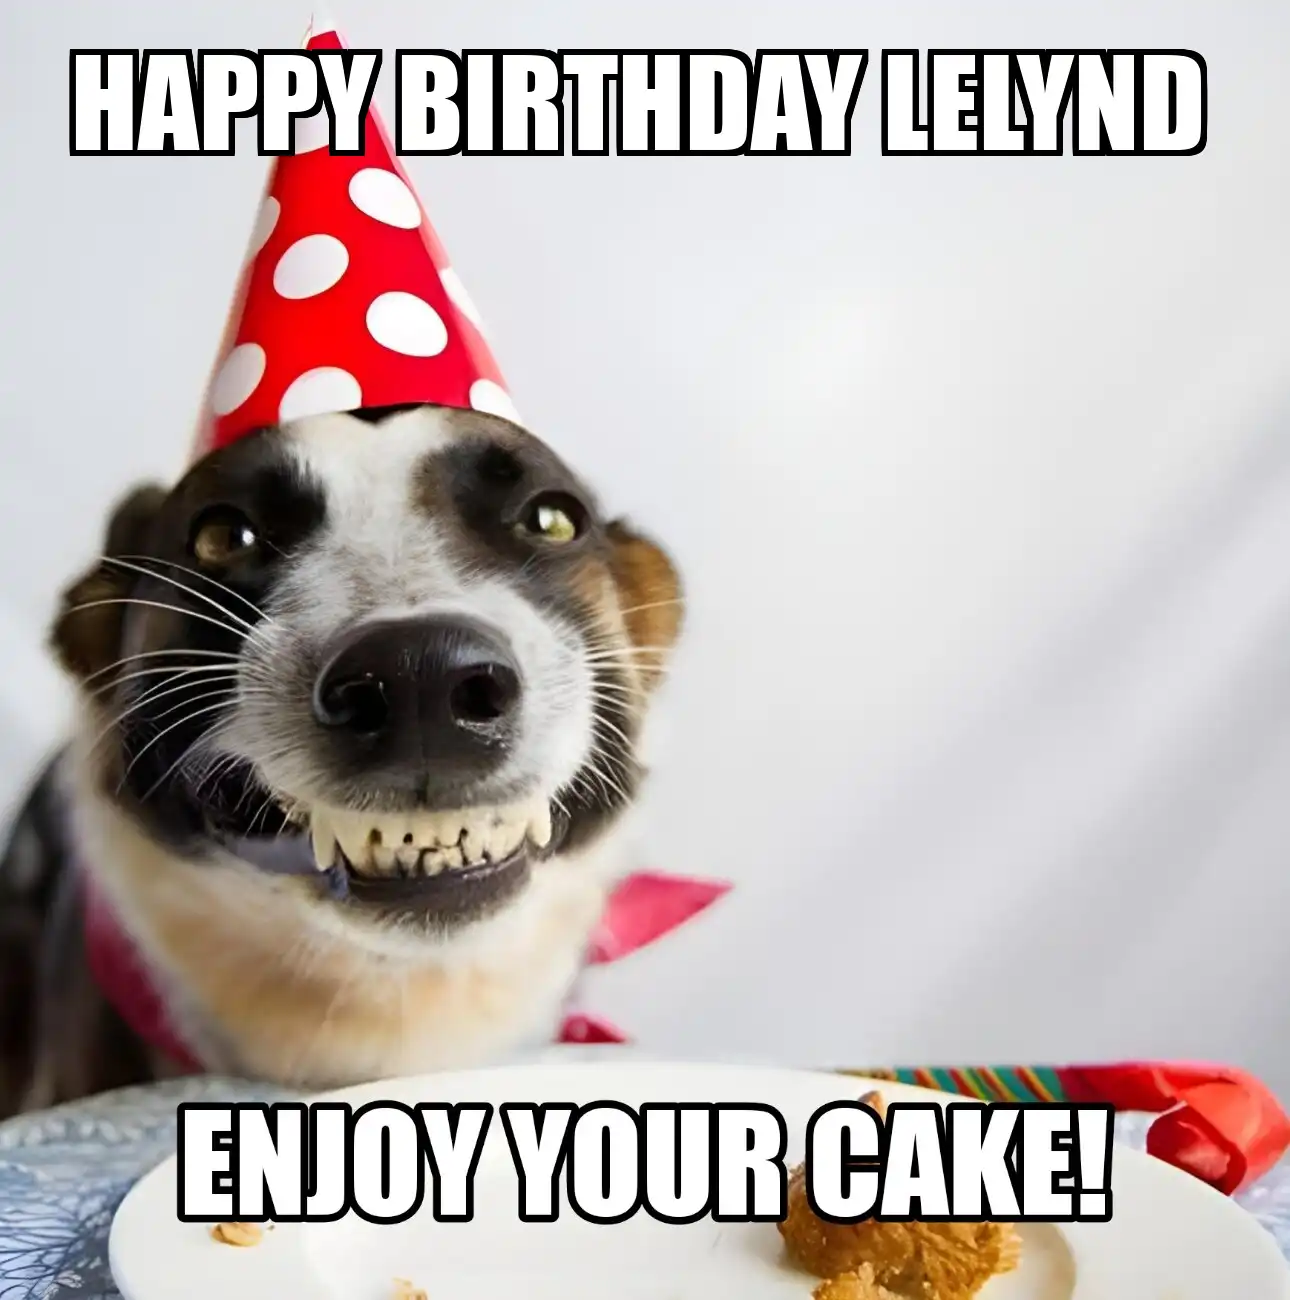 Happy Birthday Lelynd Enjoy Your Cake Dog Meme